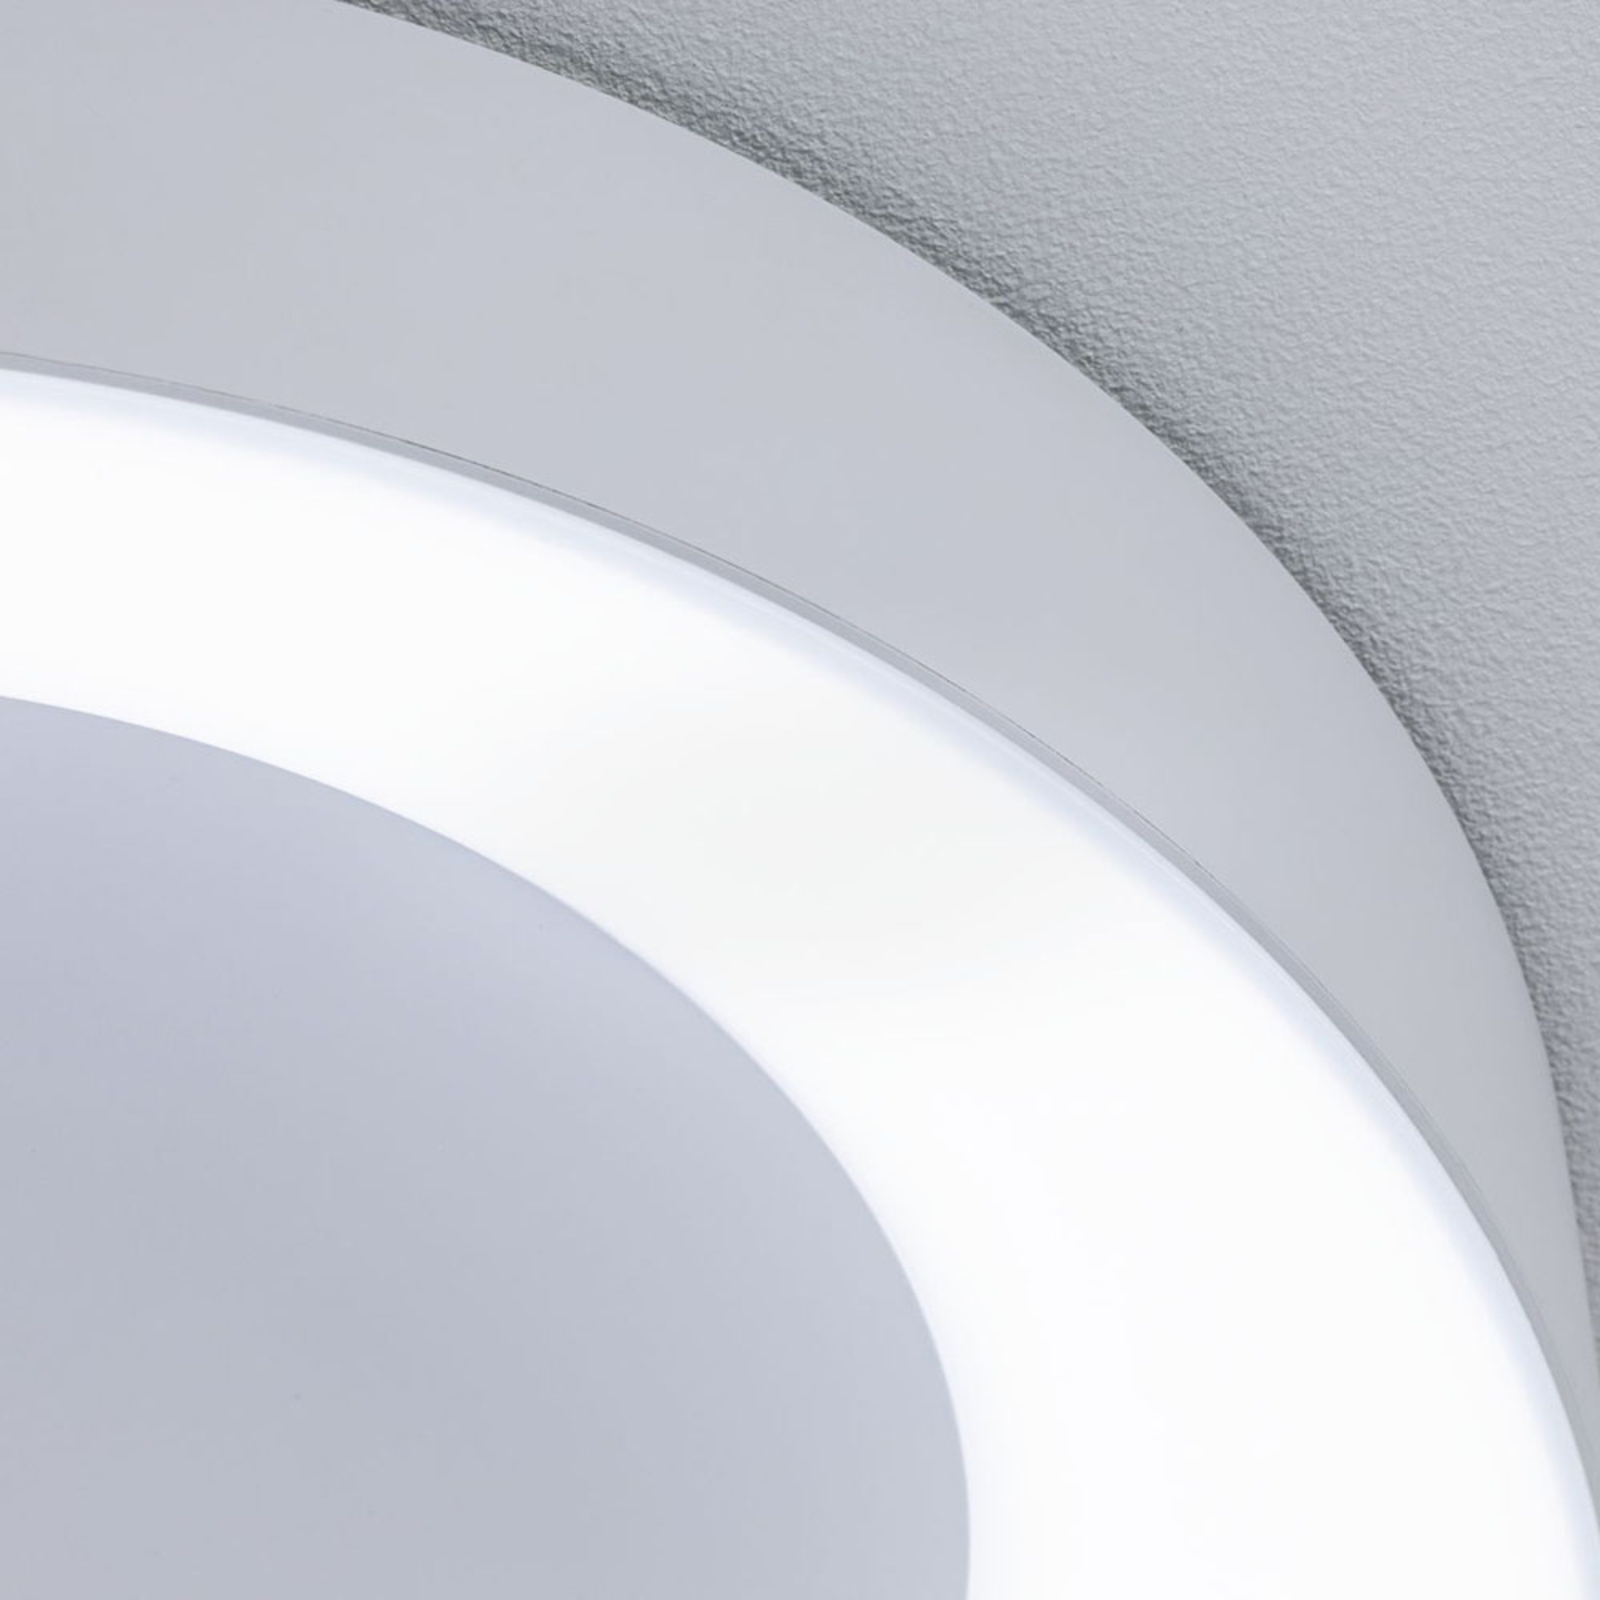 Paulmann HomeSpa Casca LED-Deckenlampe Ø 40cm weiß